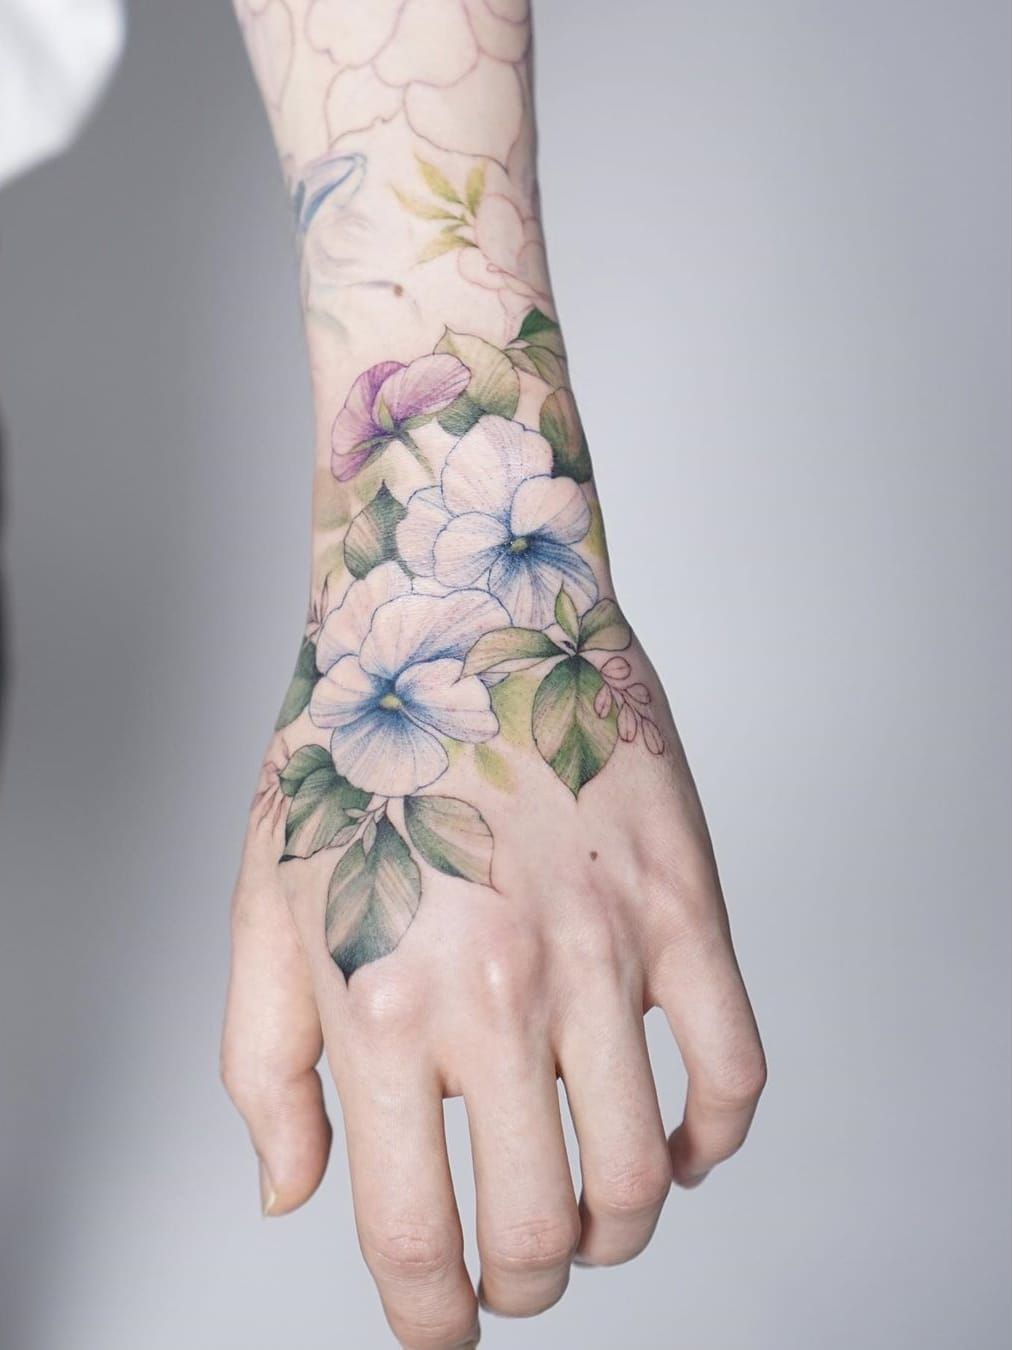 30 Best Hydrangea Tattoo Ideas  Read This First